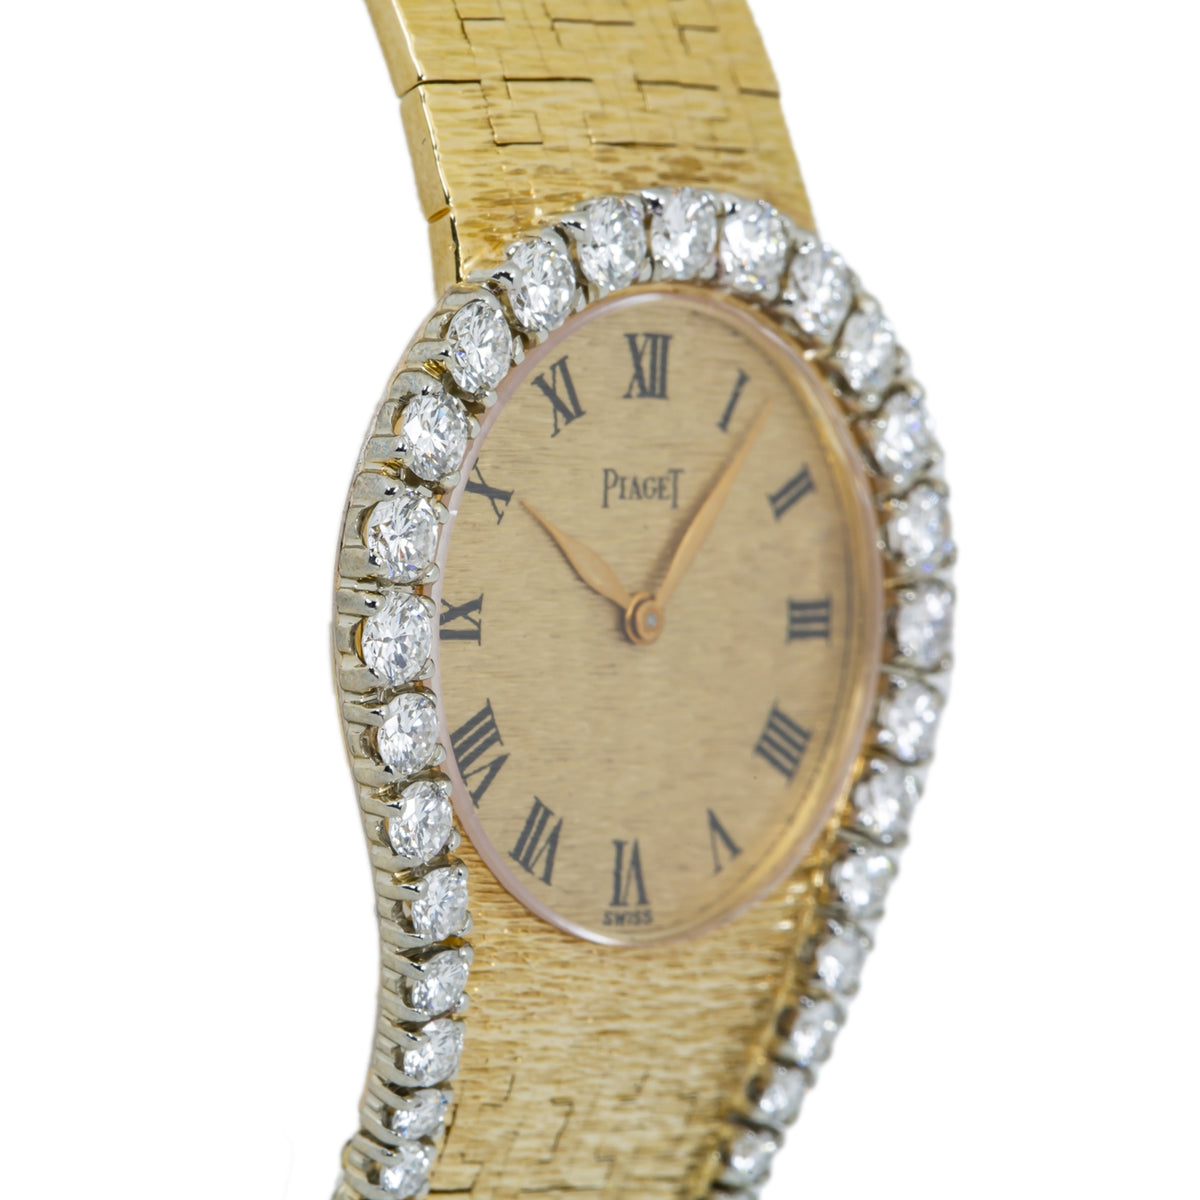 Piaget 9181 A6 Rare 18K Yellow Gold Factory Diamonds Ladies Watch 27mm 61.6g Box